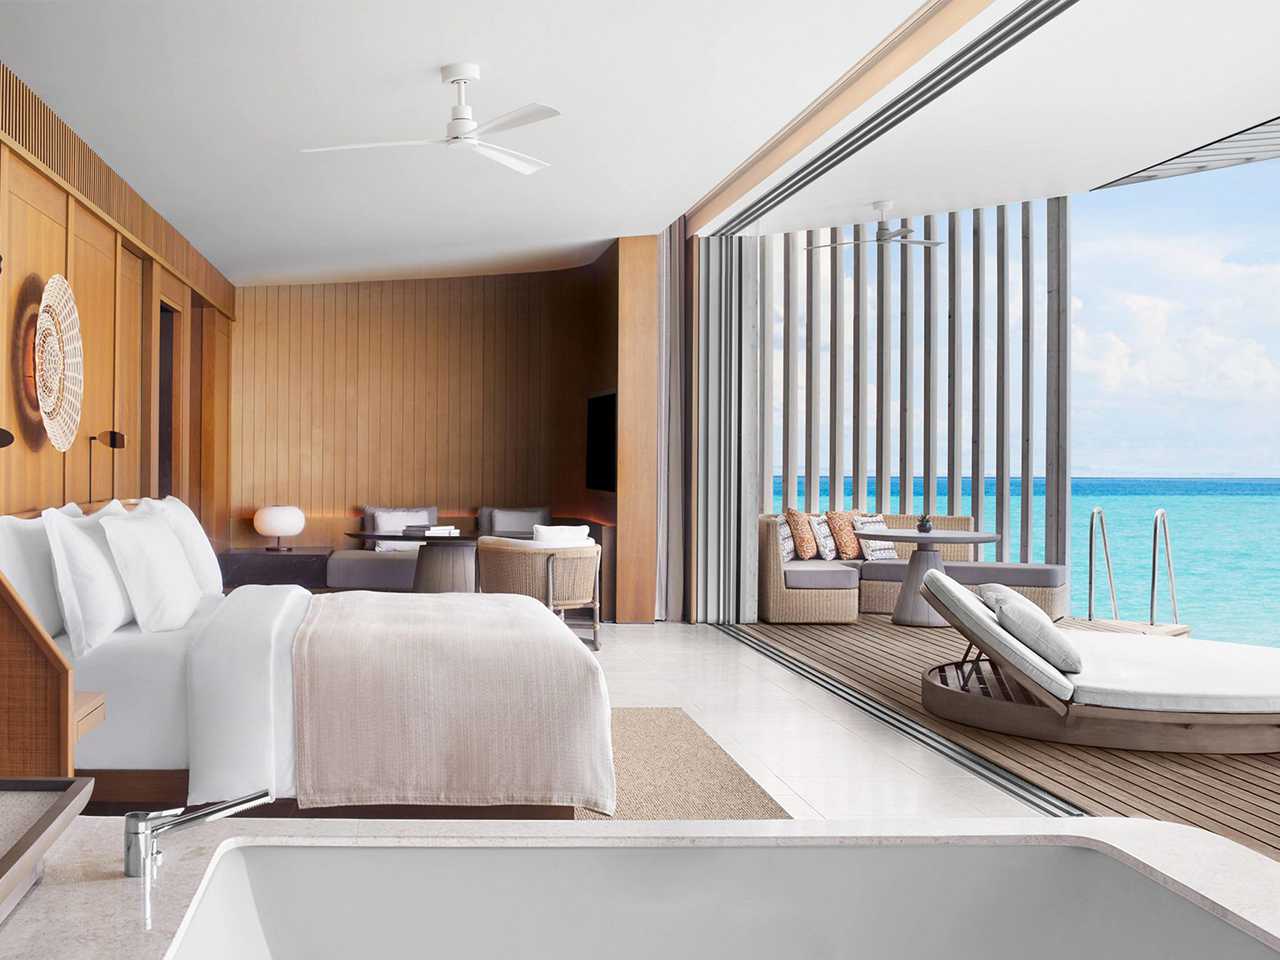 The Ritz-Carlton Maldives Fari Islands Ocean Villa